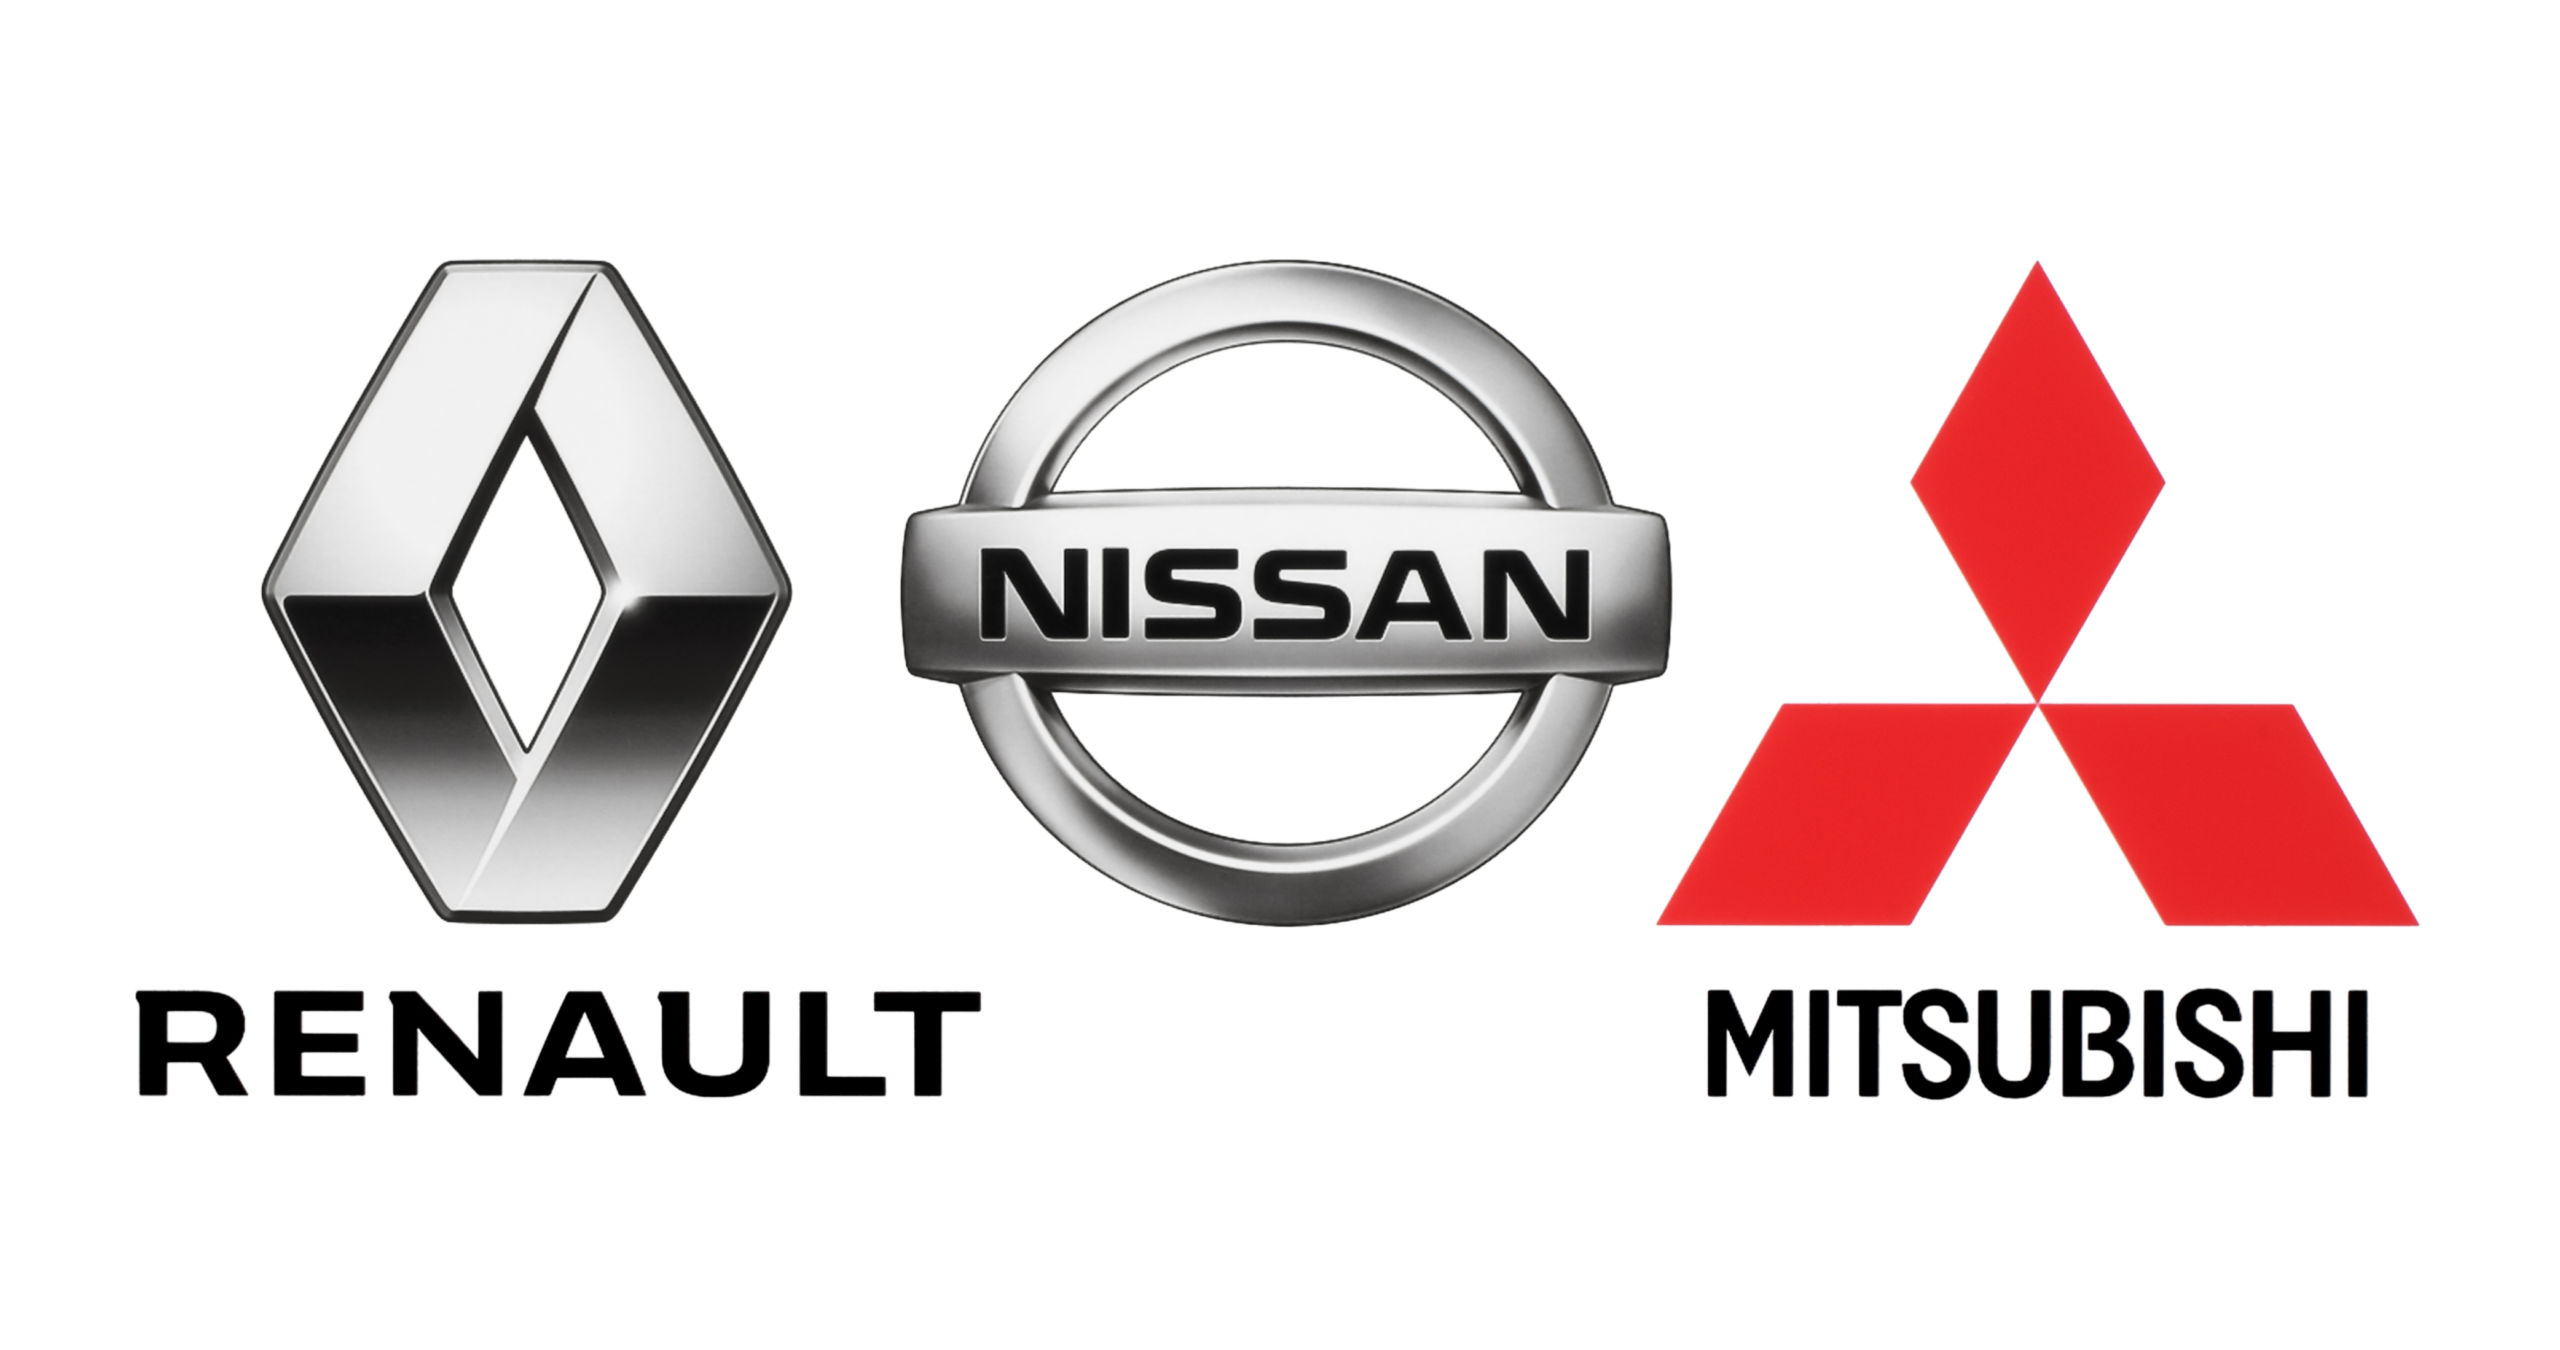 Nissan, Mitsubishi e Renault se unem para construir o futuro dos carros elétricos para 2030. renault nissan mitsubishi alianca